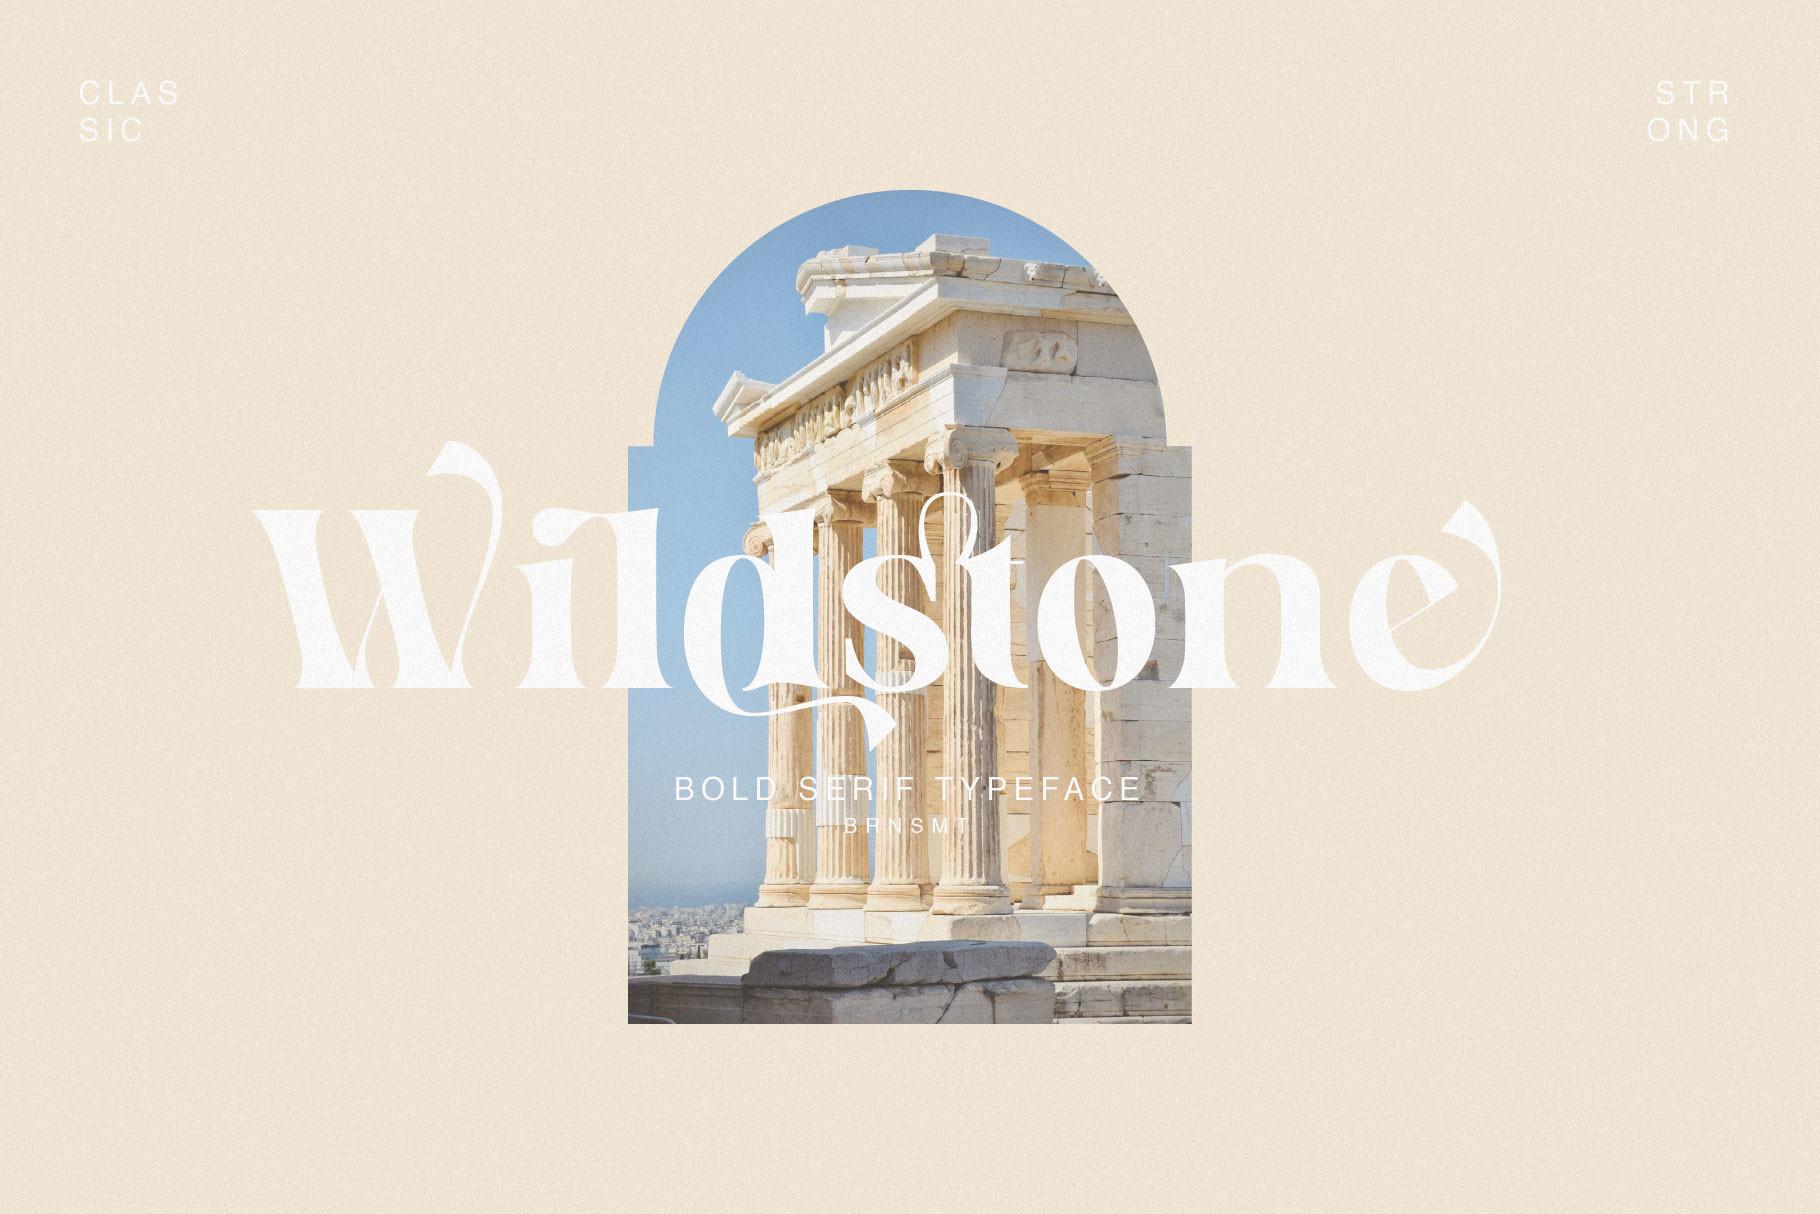 Wildstone Font